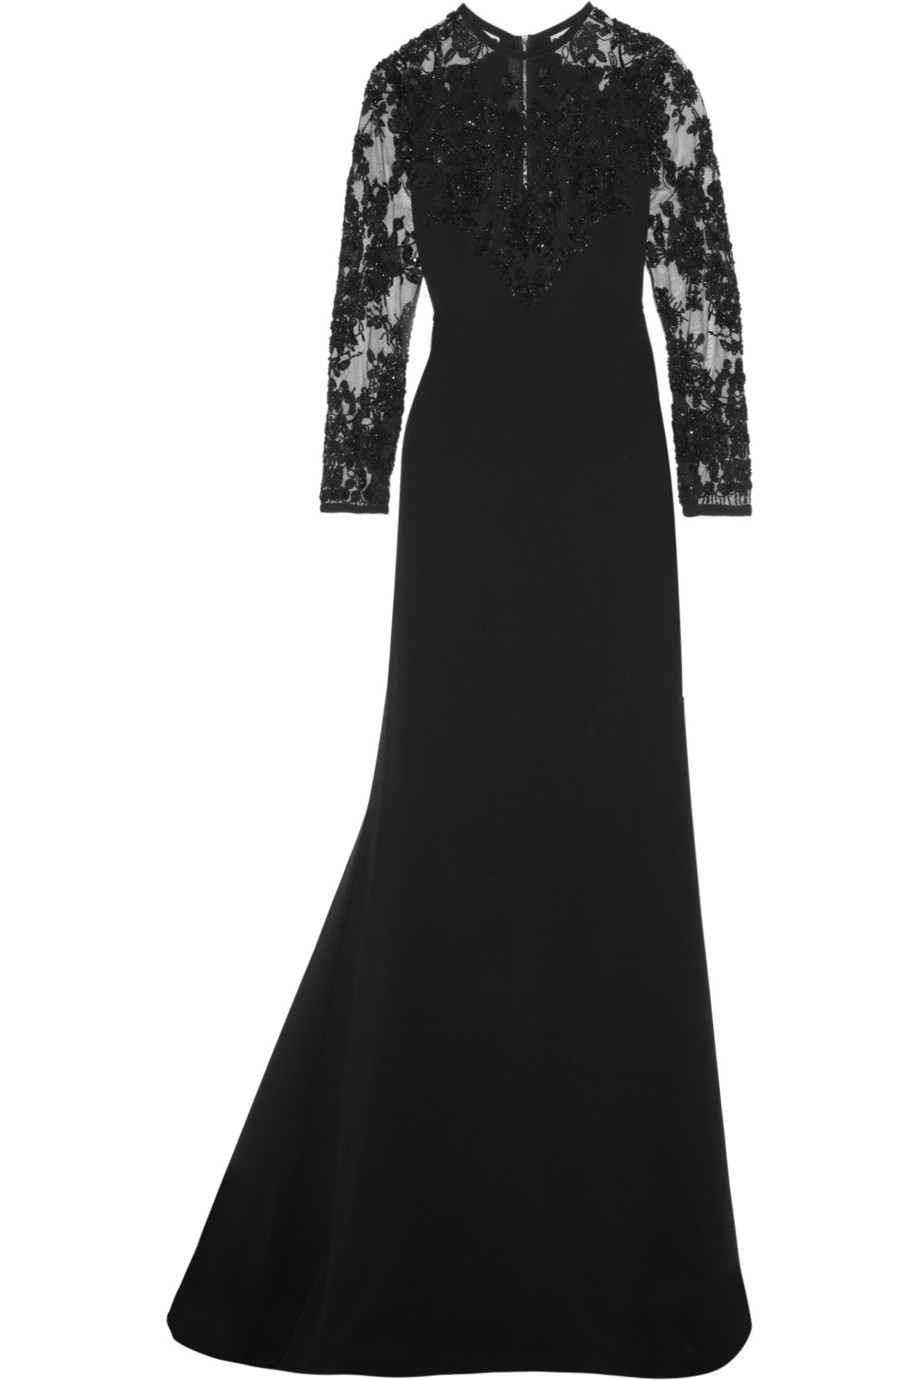 Lyst - Elie Saab Embellished Tulle-Paneled Crepe Gown in Black